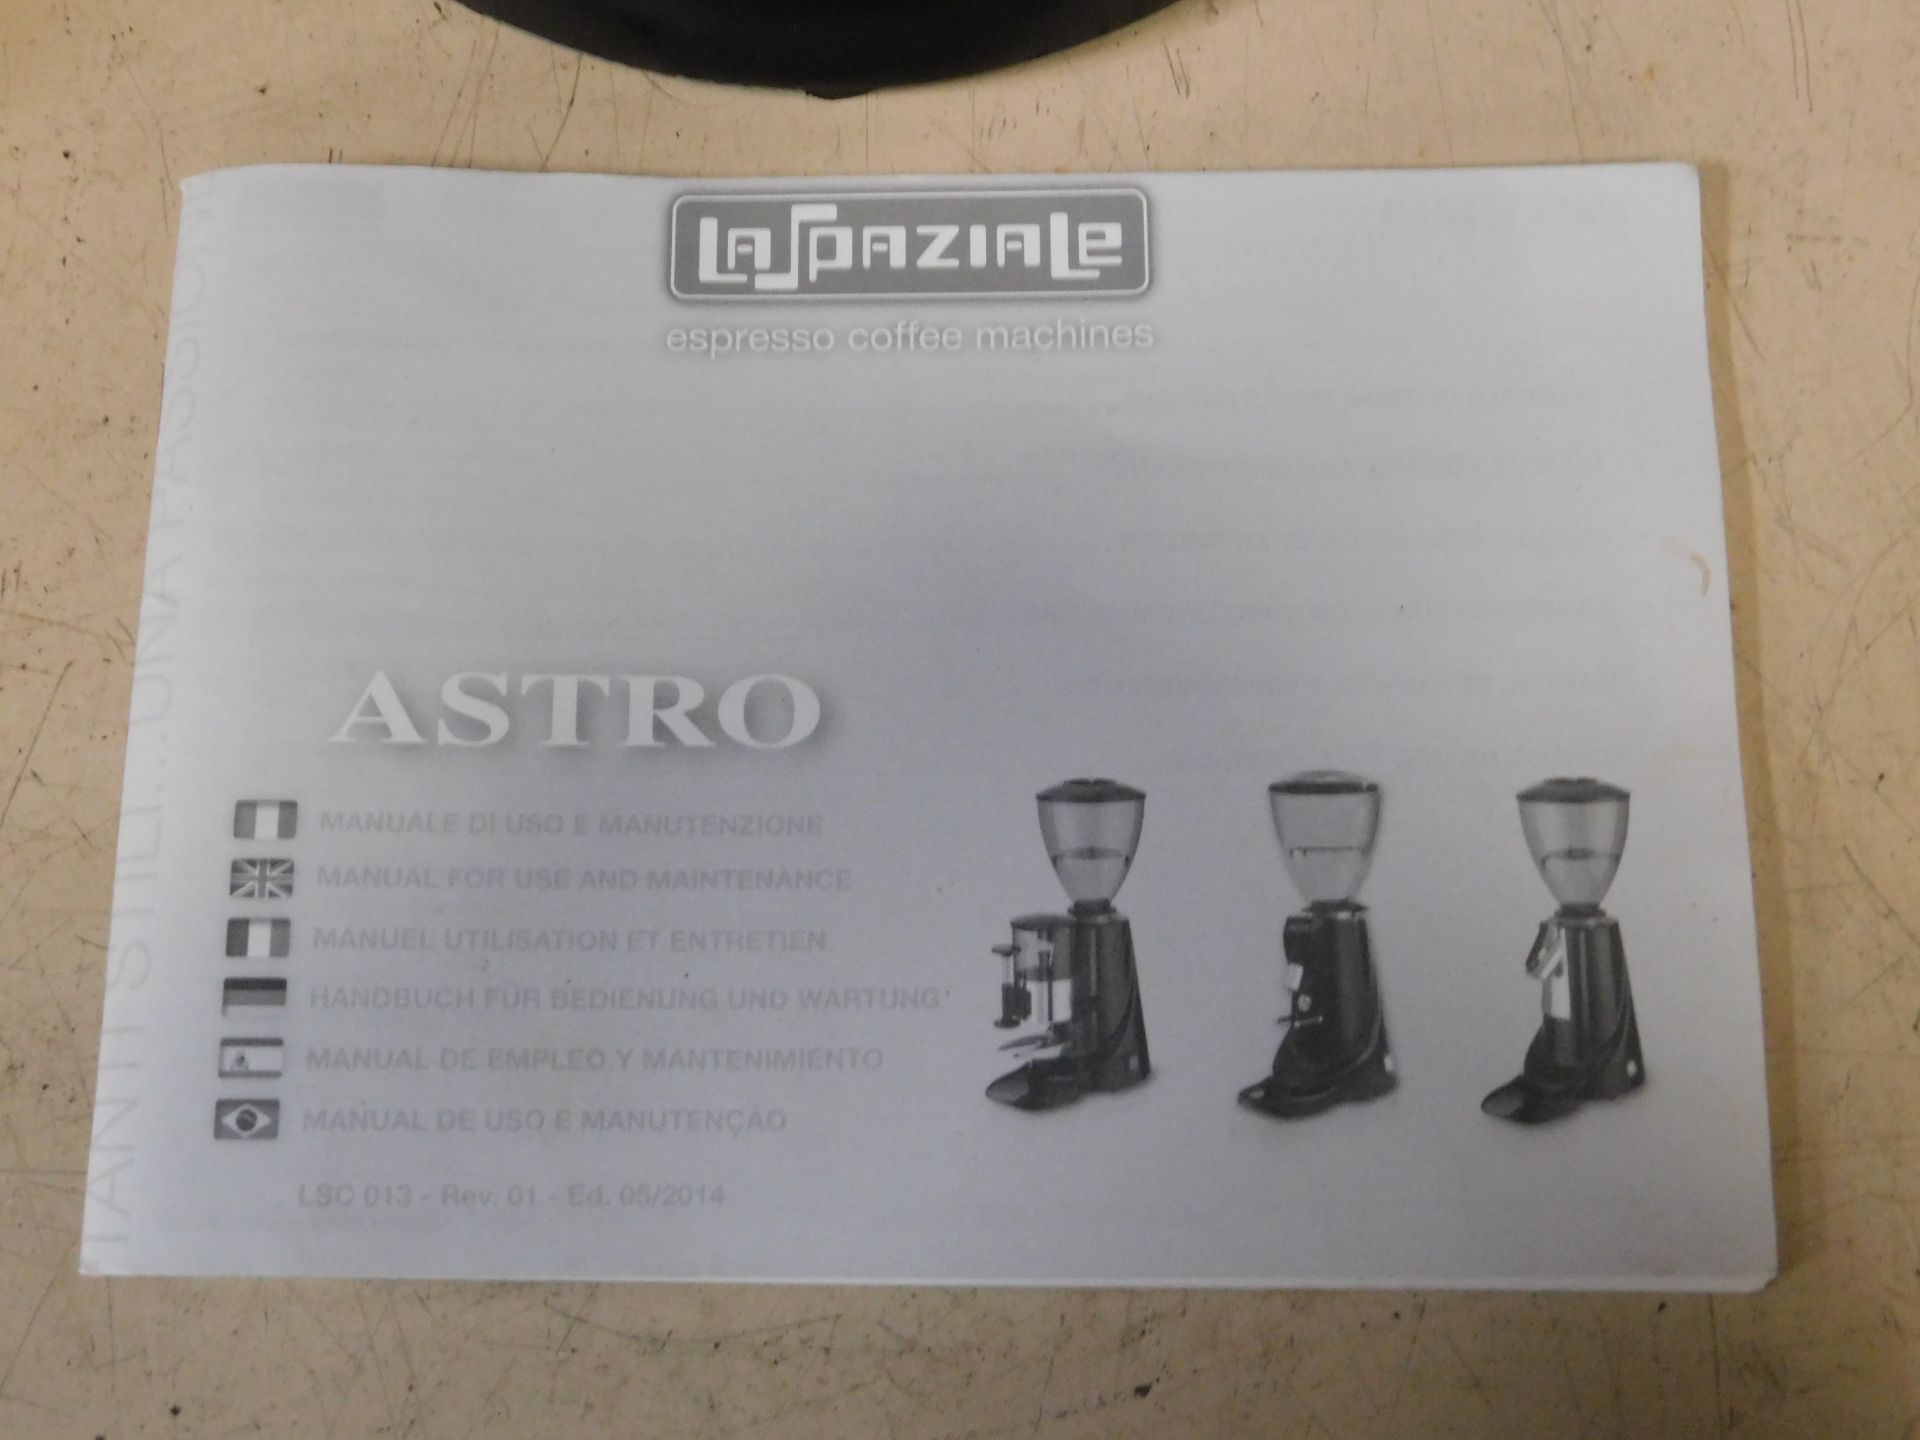 La Spaziale Astro 12 Espresso Coffee Grinder, Serial Number 1605L1288 - Image 2 of 3